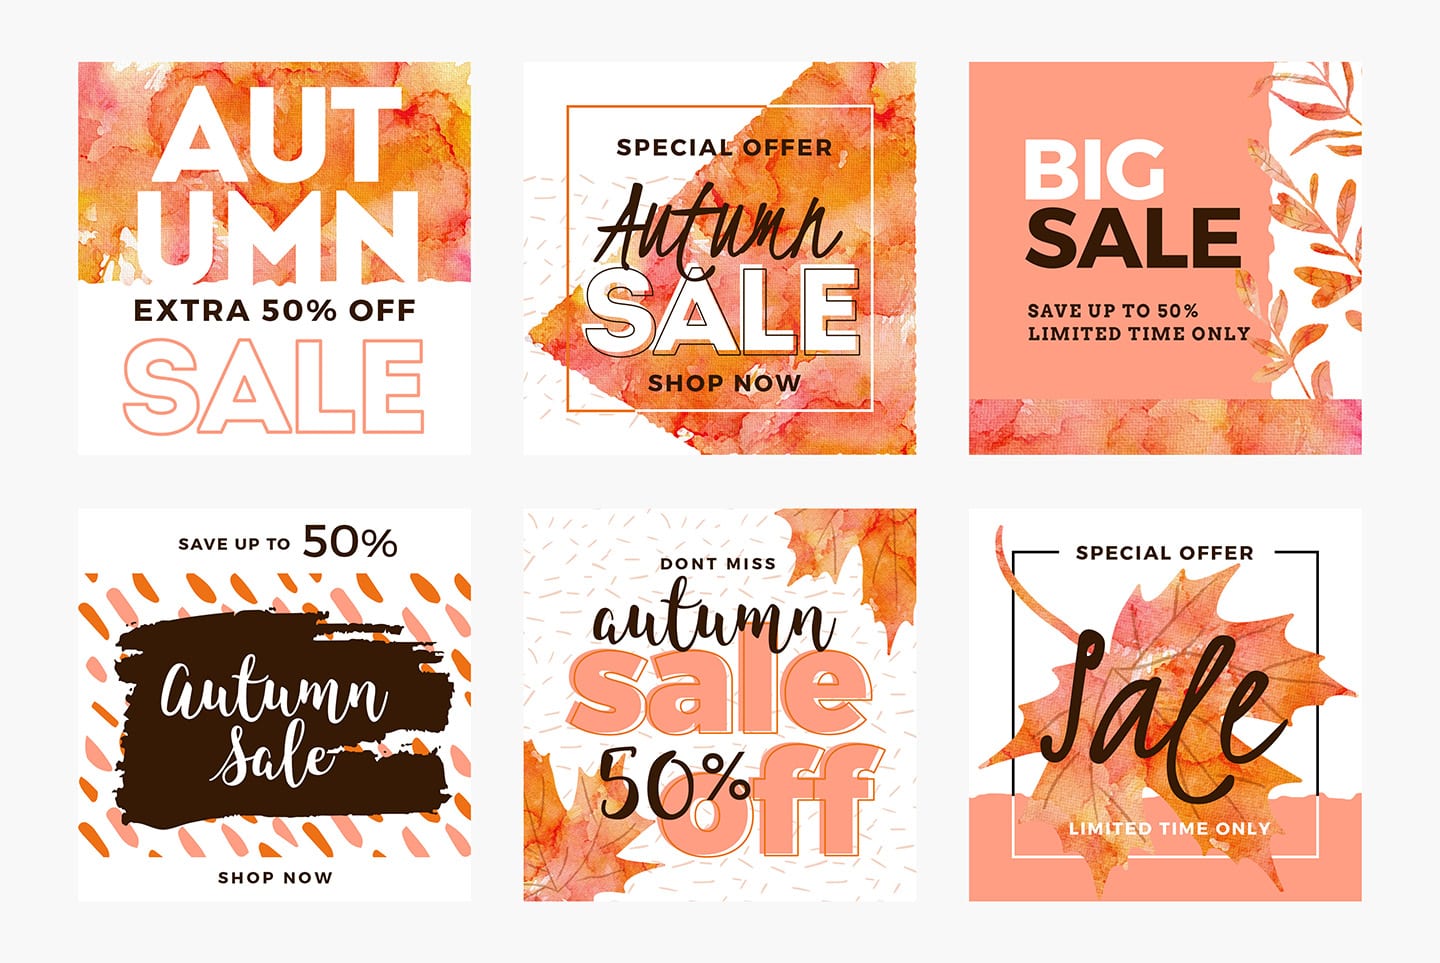 Autumn / Fall Social Media Templates Pack